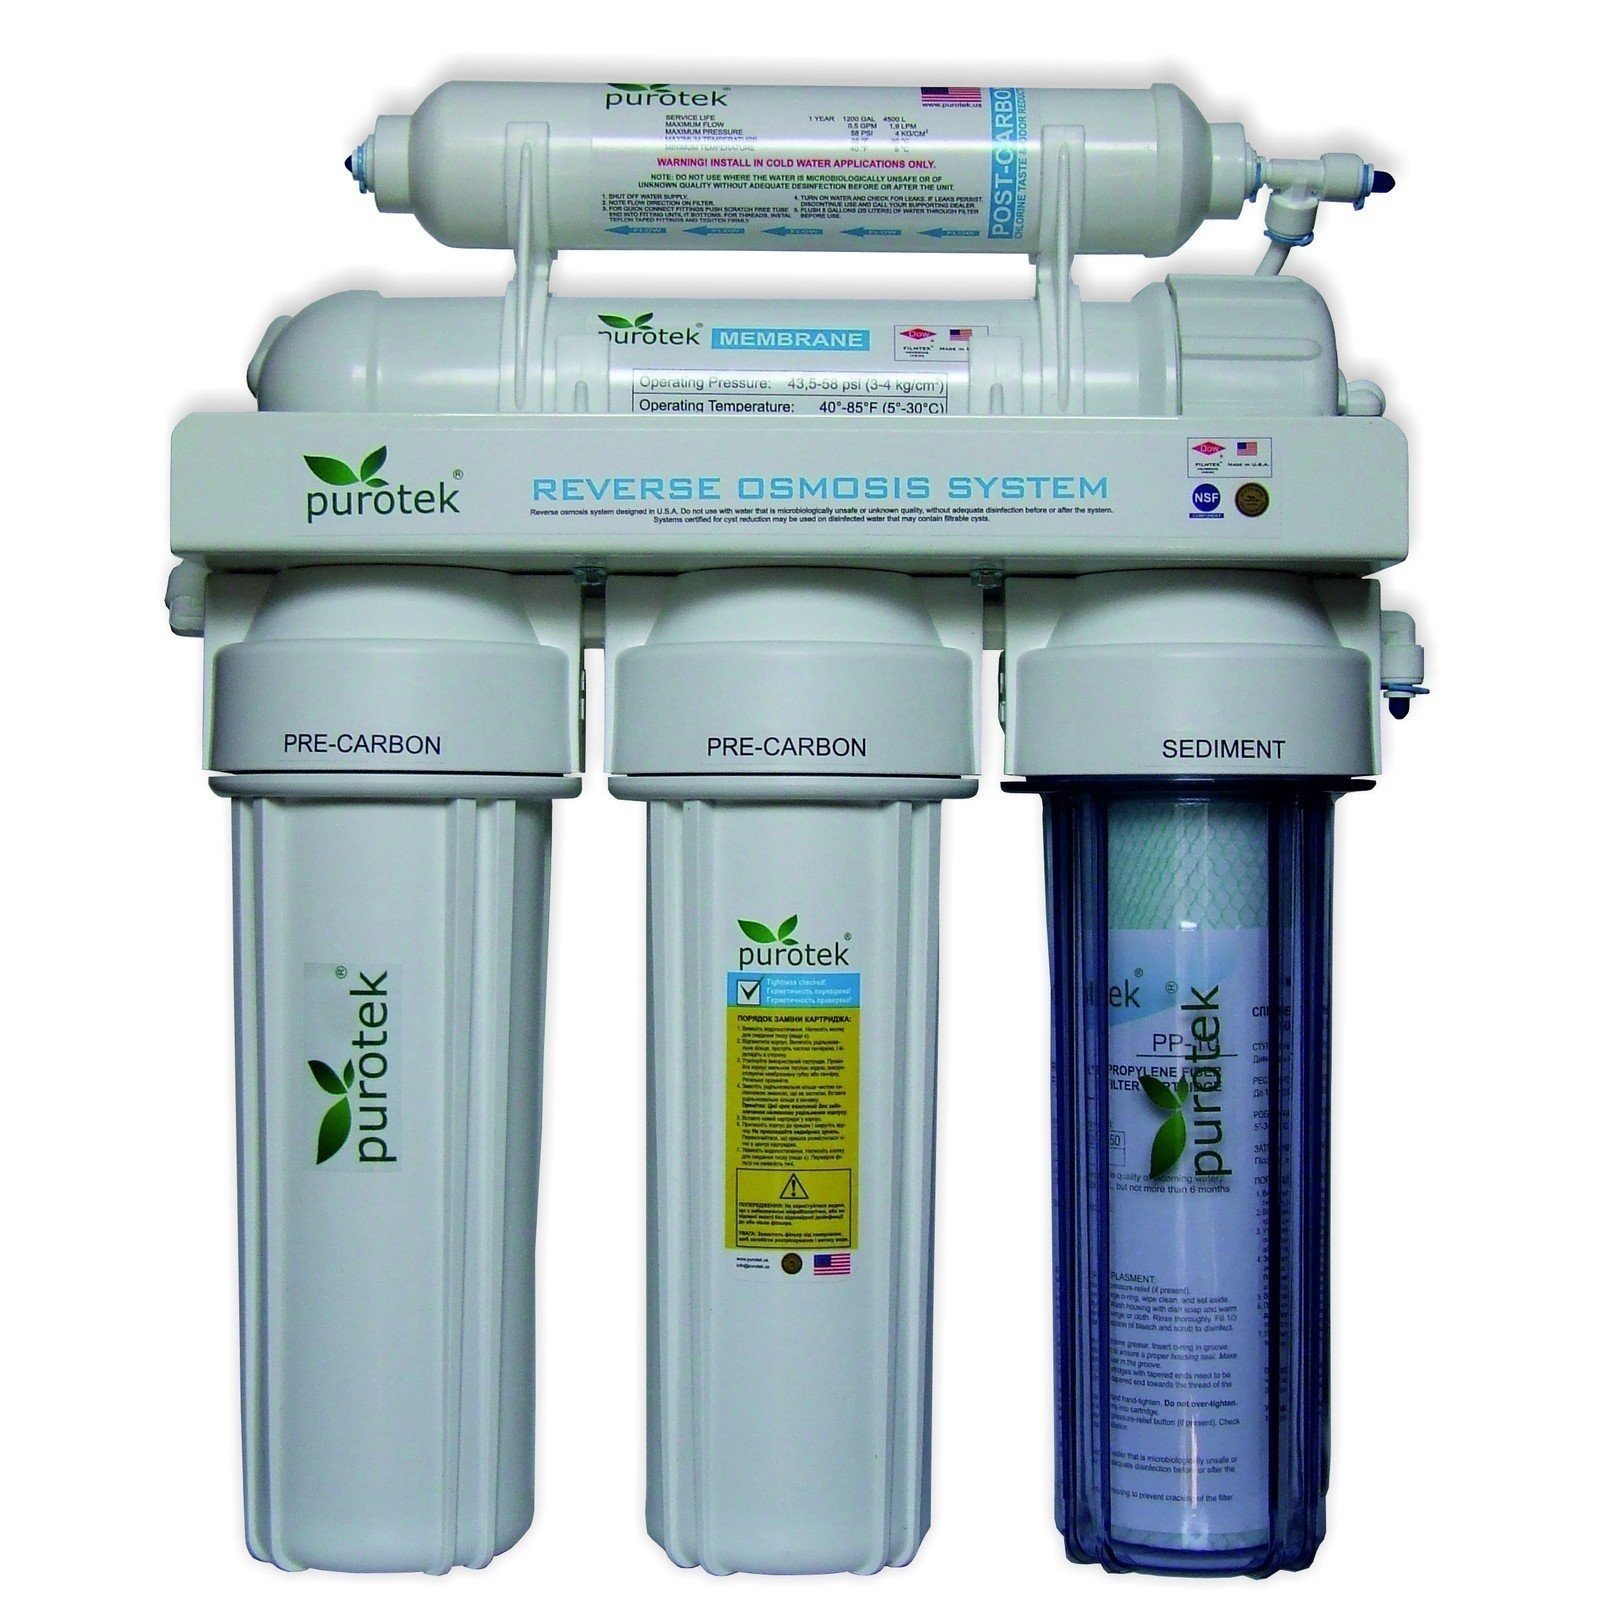 Su aritma cihazi reverse osmosis water treatment system marka ionica